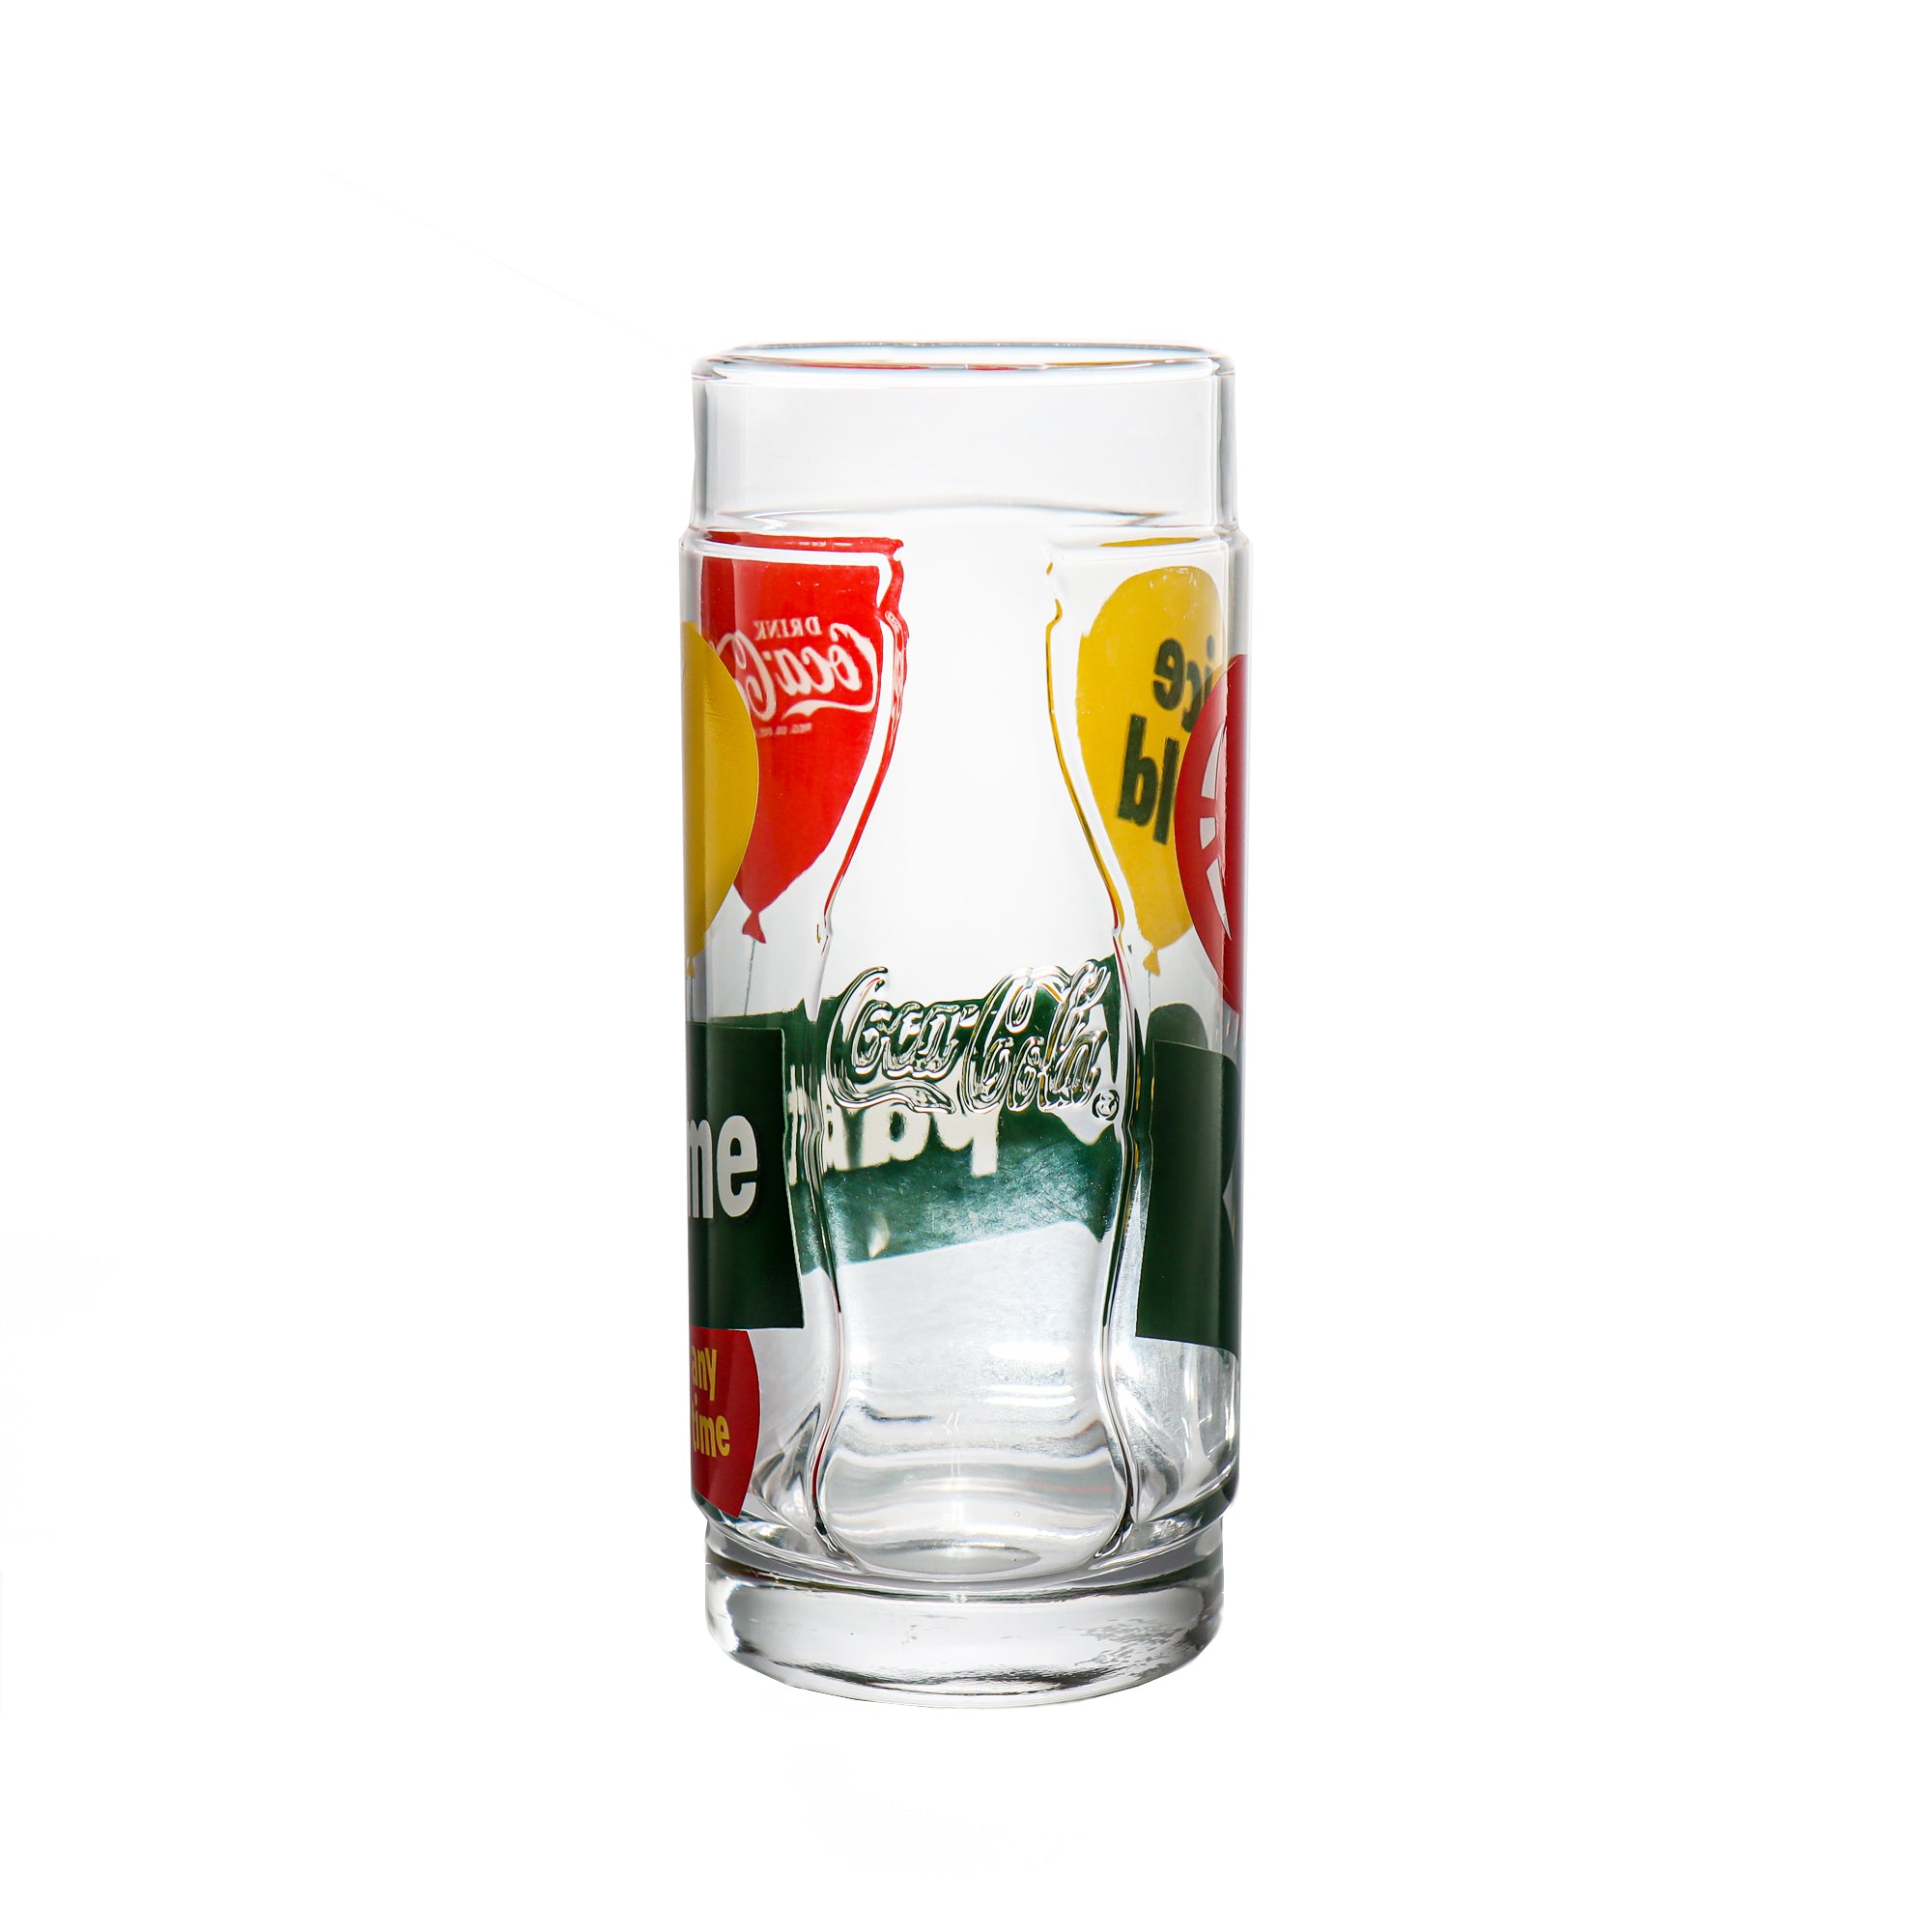 Coke Hiball Glass Tumbler 250ml Party Time Pasabahce 40995